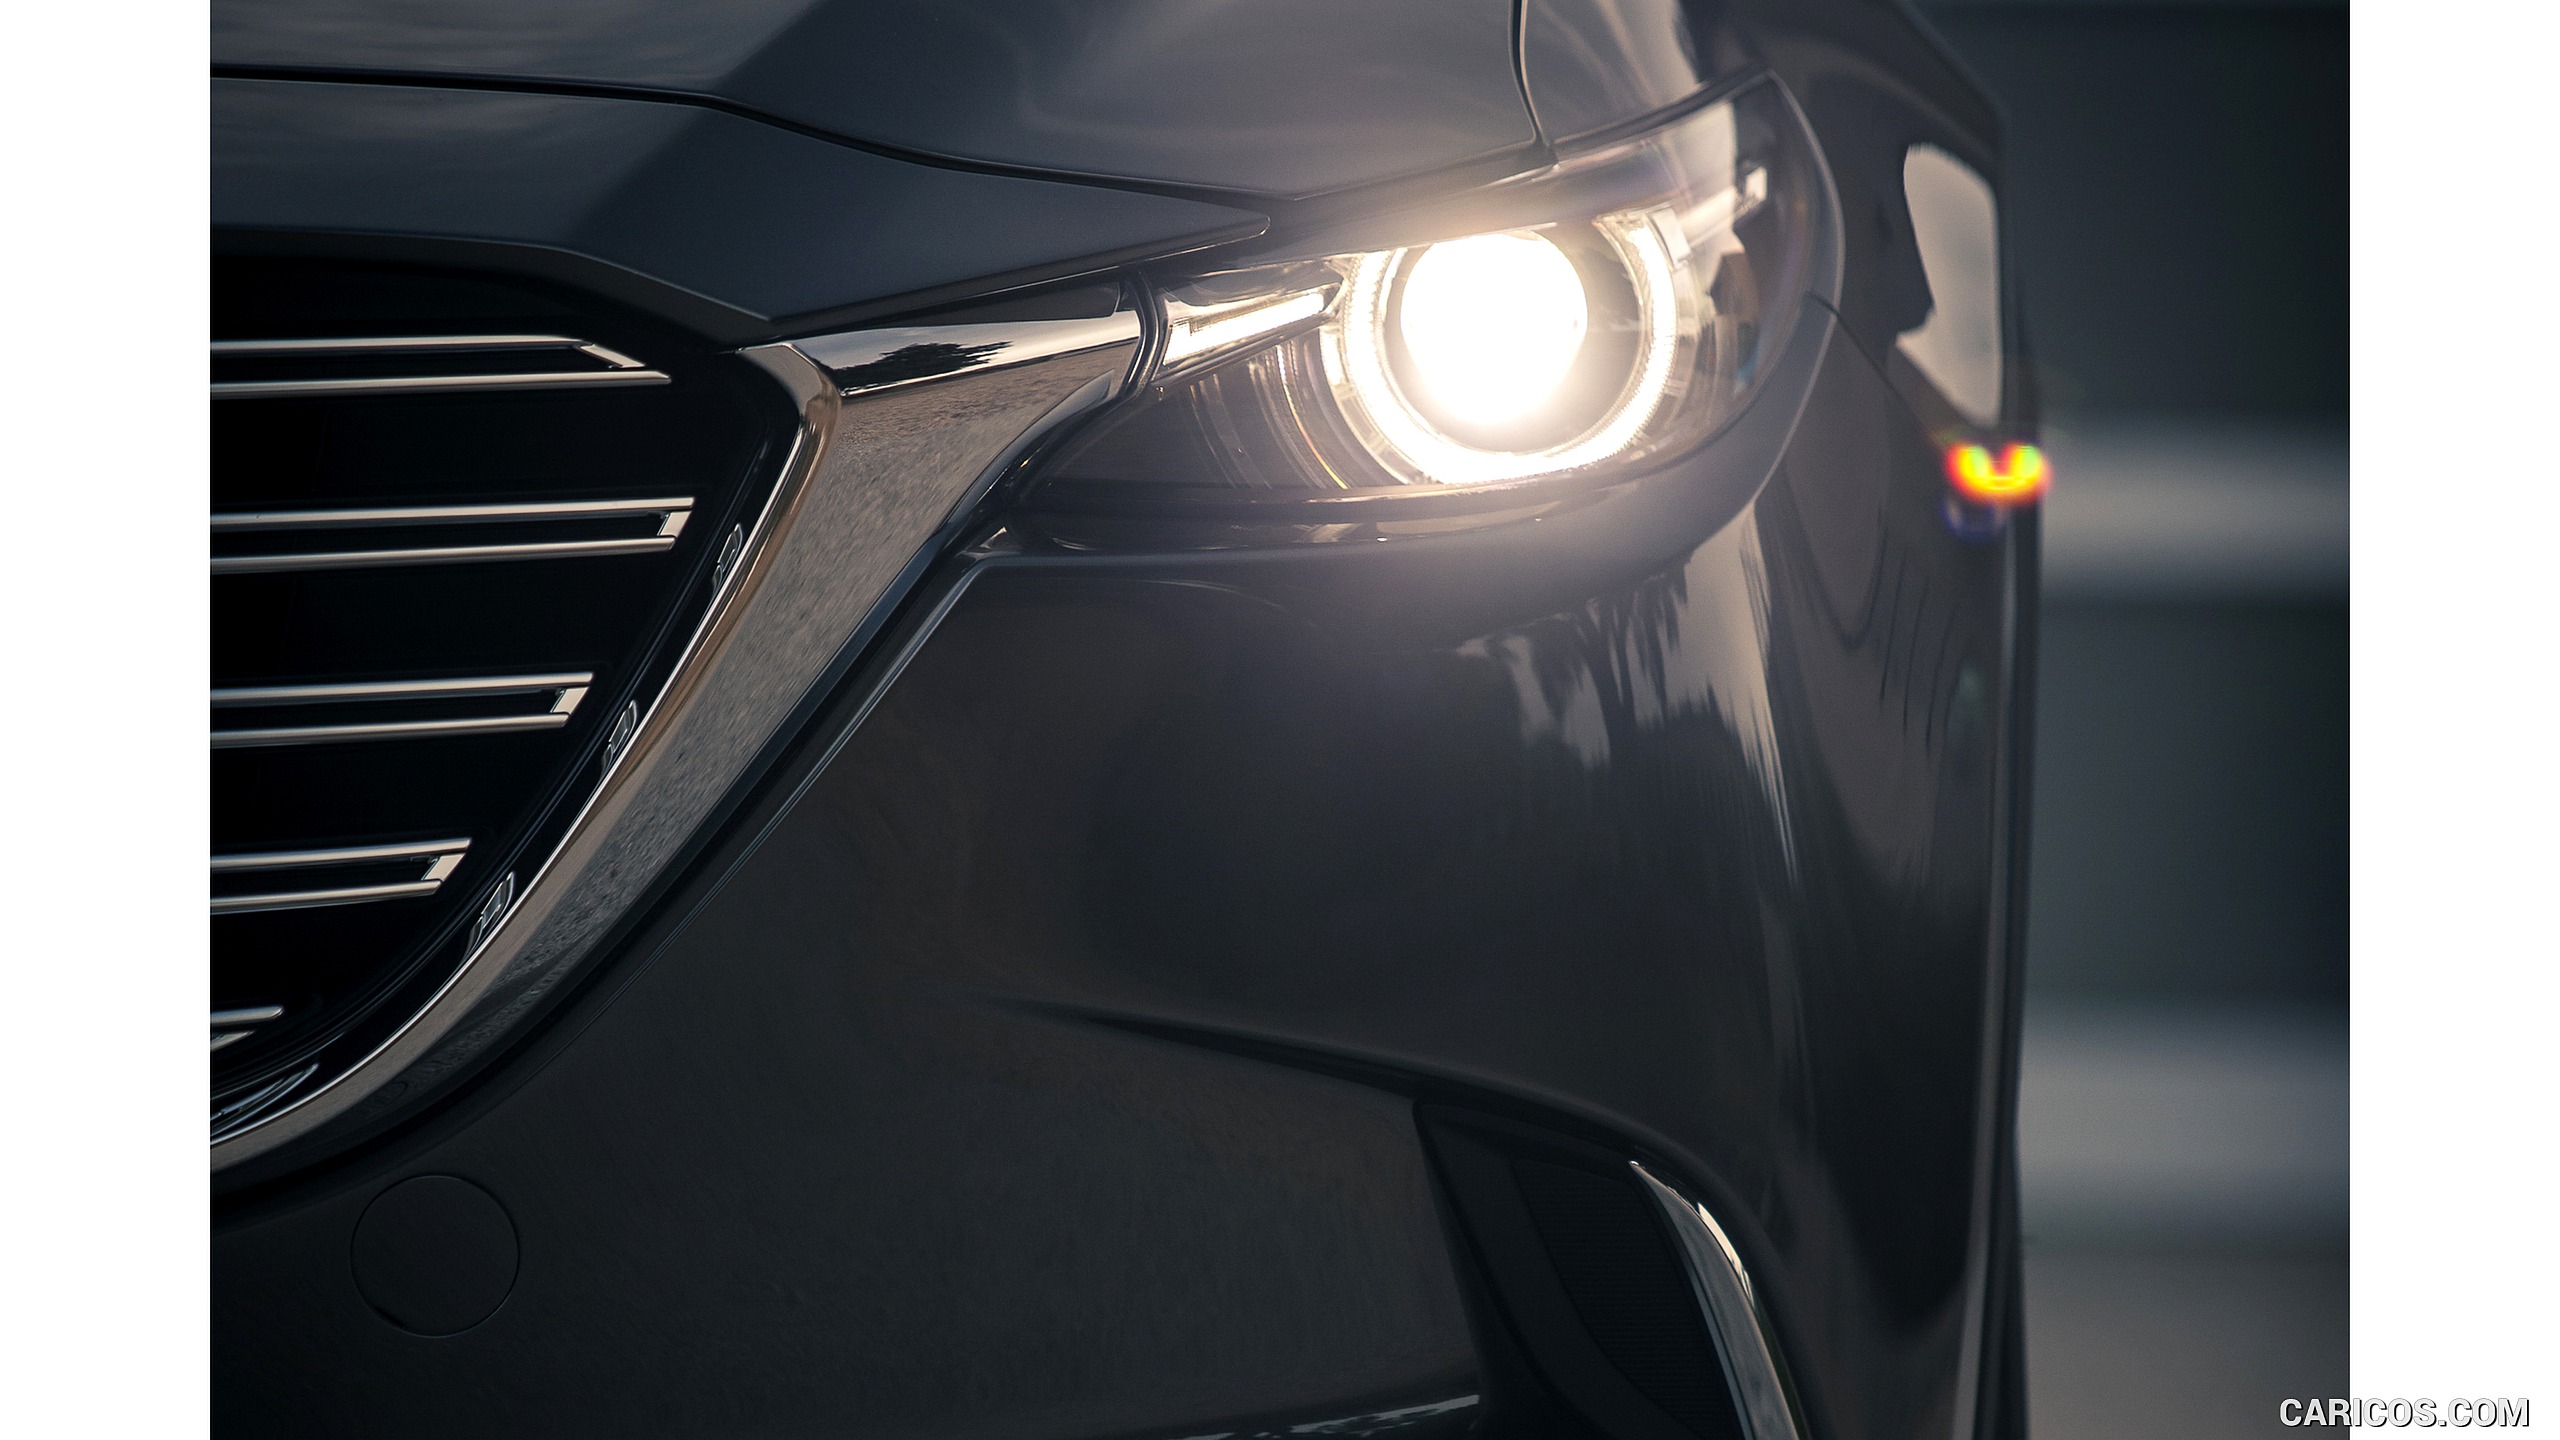 2016 Mazda CX-9 - Headlight, #15 of 69